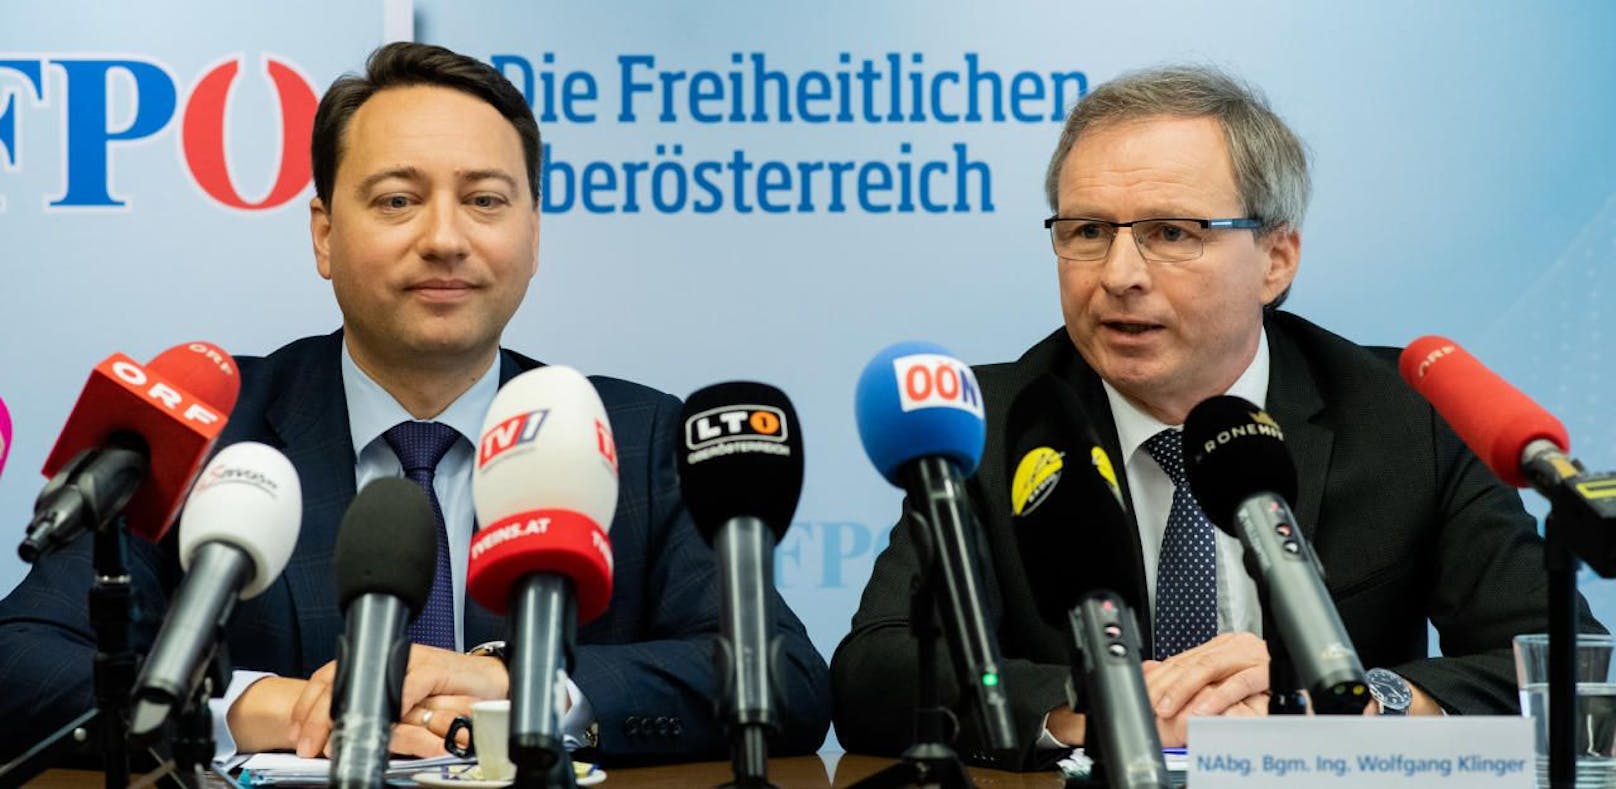 FPOÖ-Chef Manfred Haimbuchner (li.) mit Landesrat Wolfgang Klinger